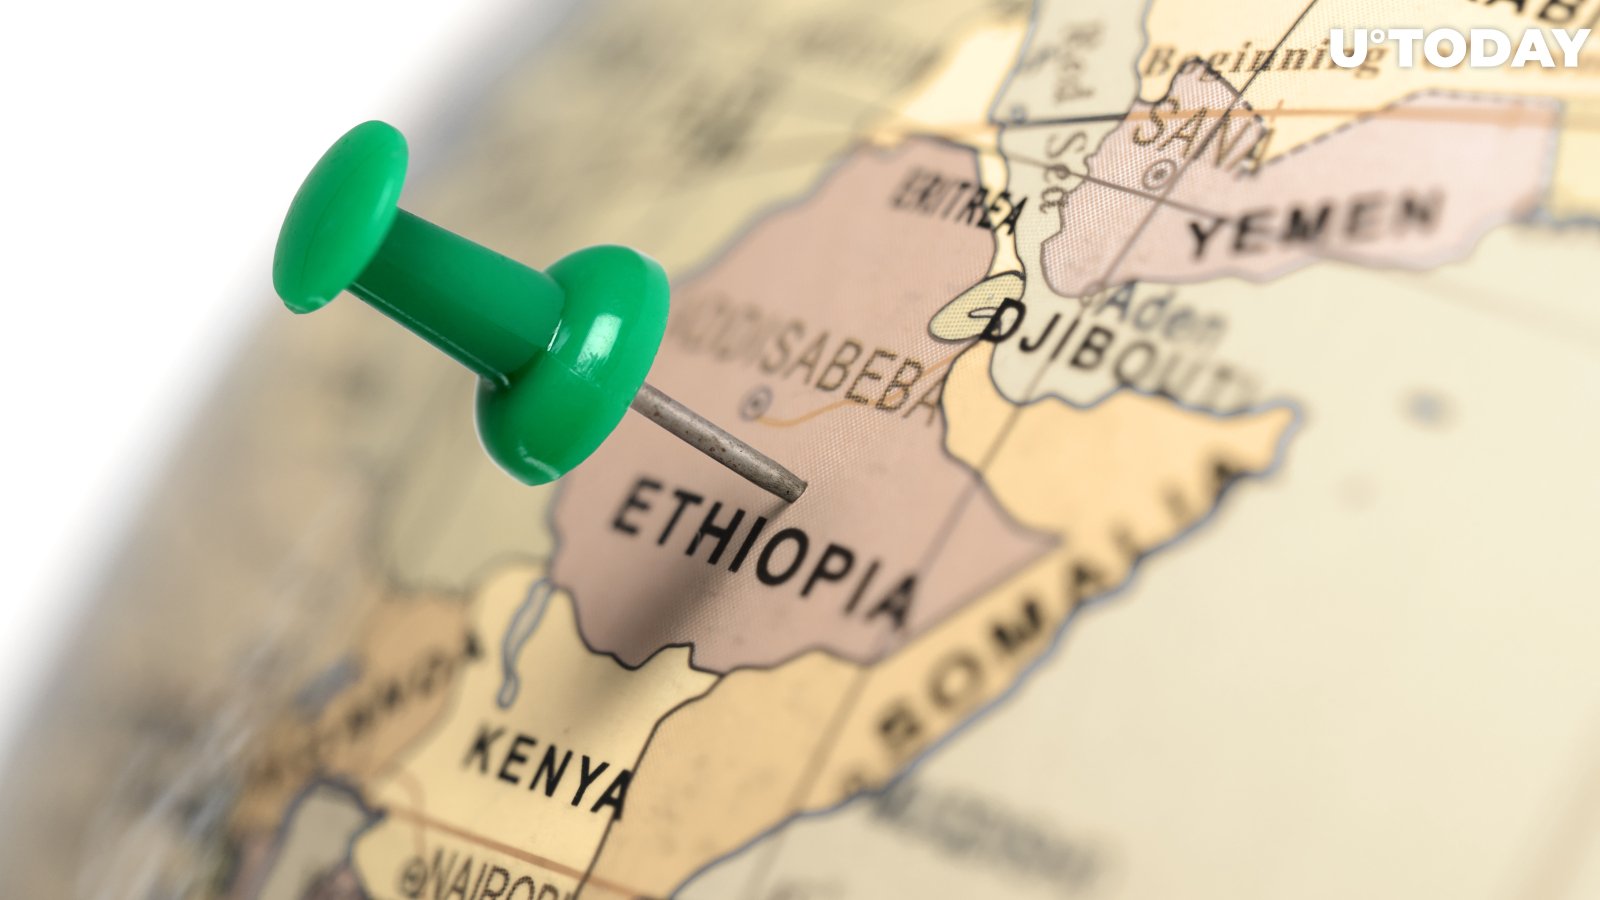 Cardano Developer IOHK Announces "World's Biggest Blockchain Deployment" in Ethiopia